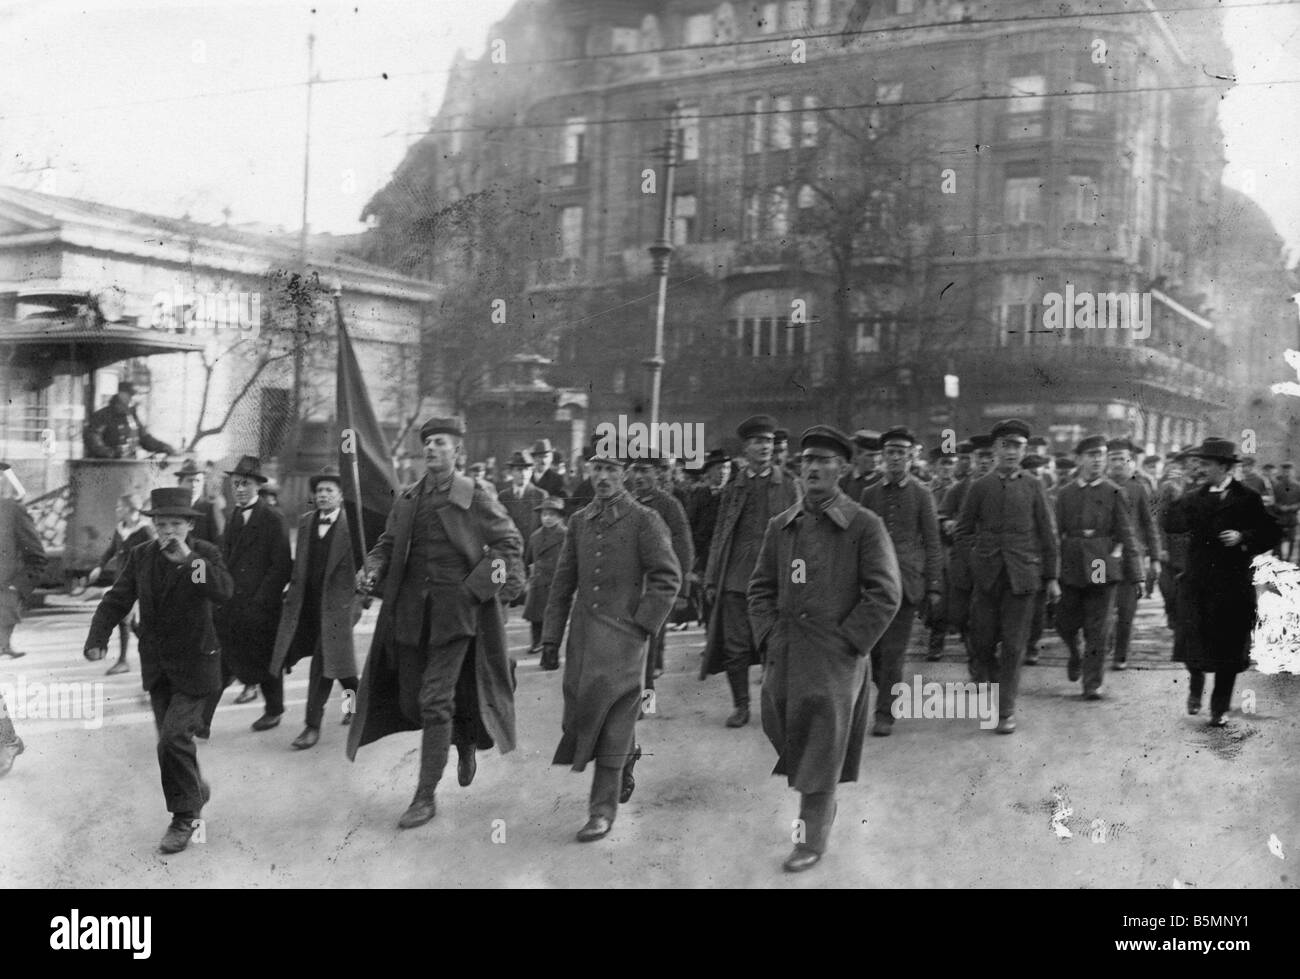 8 1918 11 0 A1 Soldiers in Potsdamer Platz 1918 Berlin Revolution 1918 19 Soldiers marching in Potsdamer Platz at the corner of Stock Photo